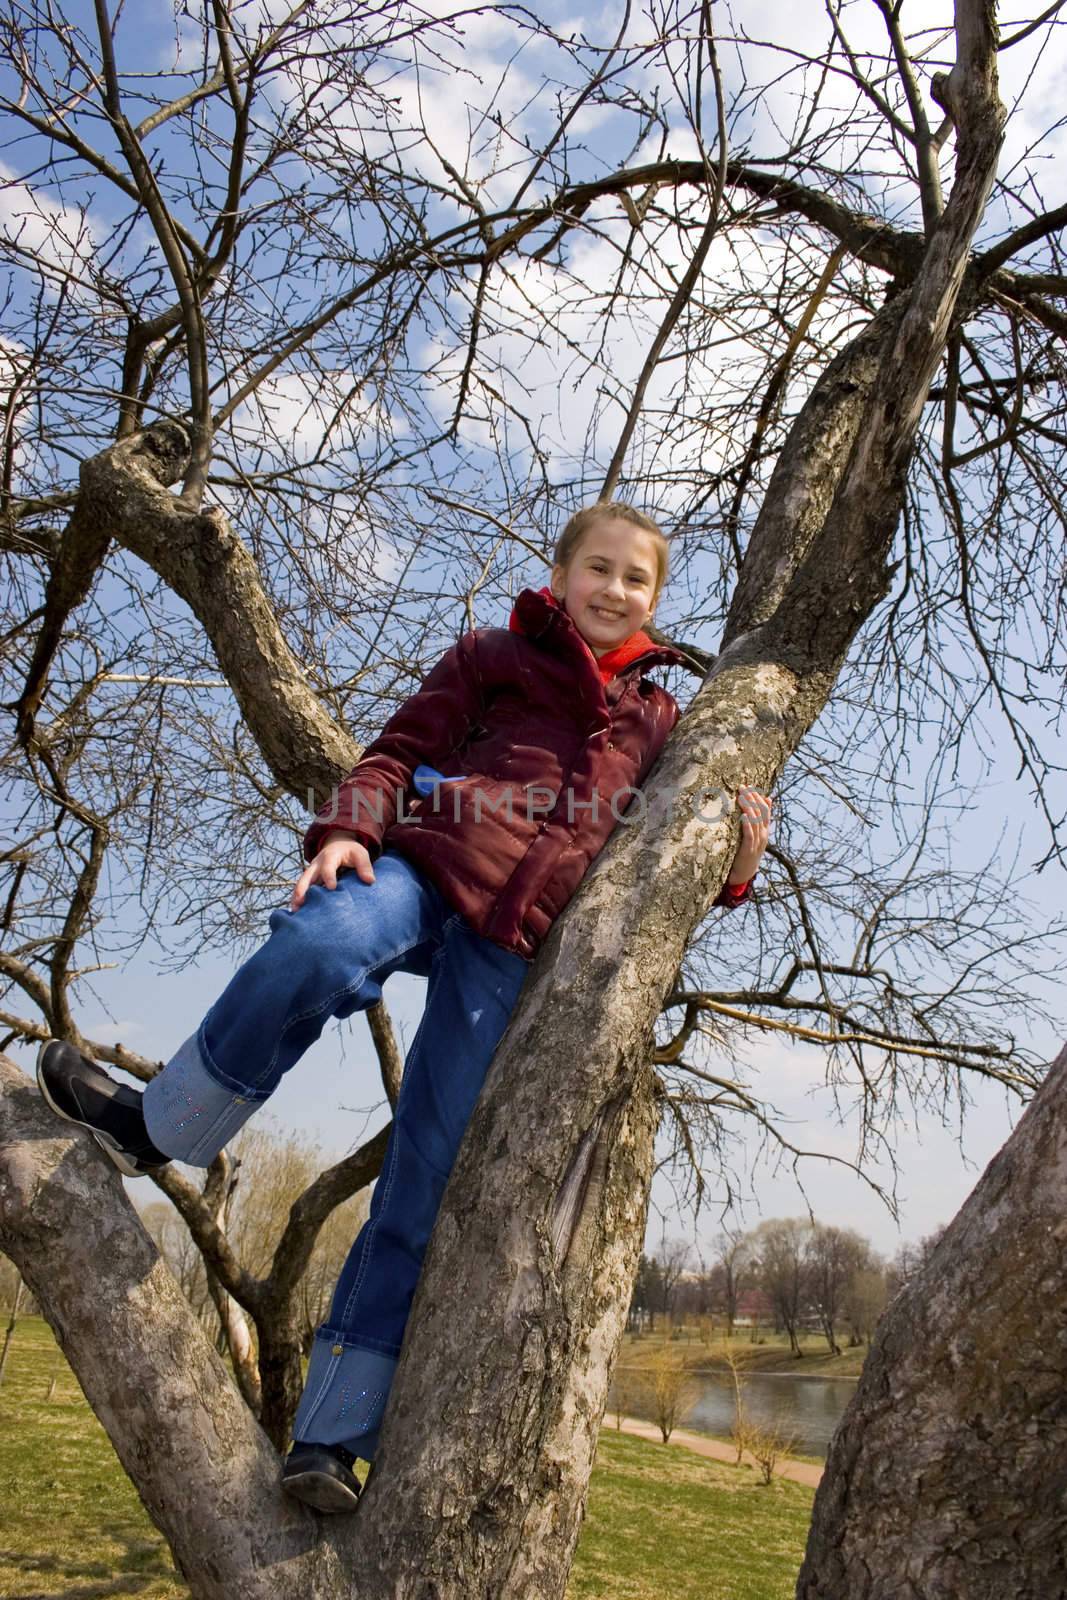 Girl will climb on tree. City park. Spring time.